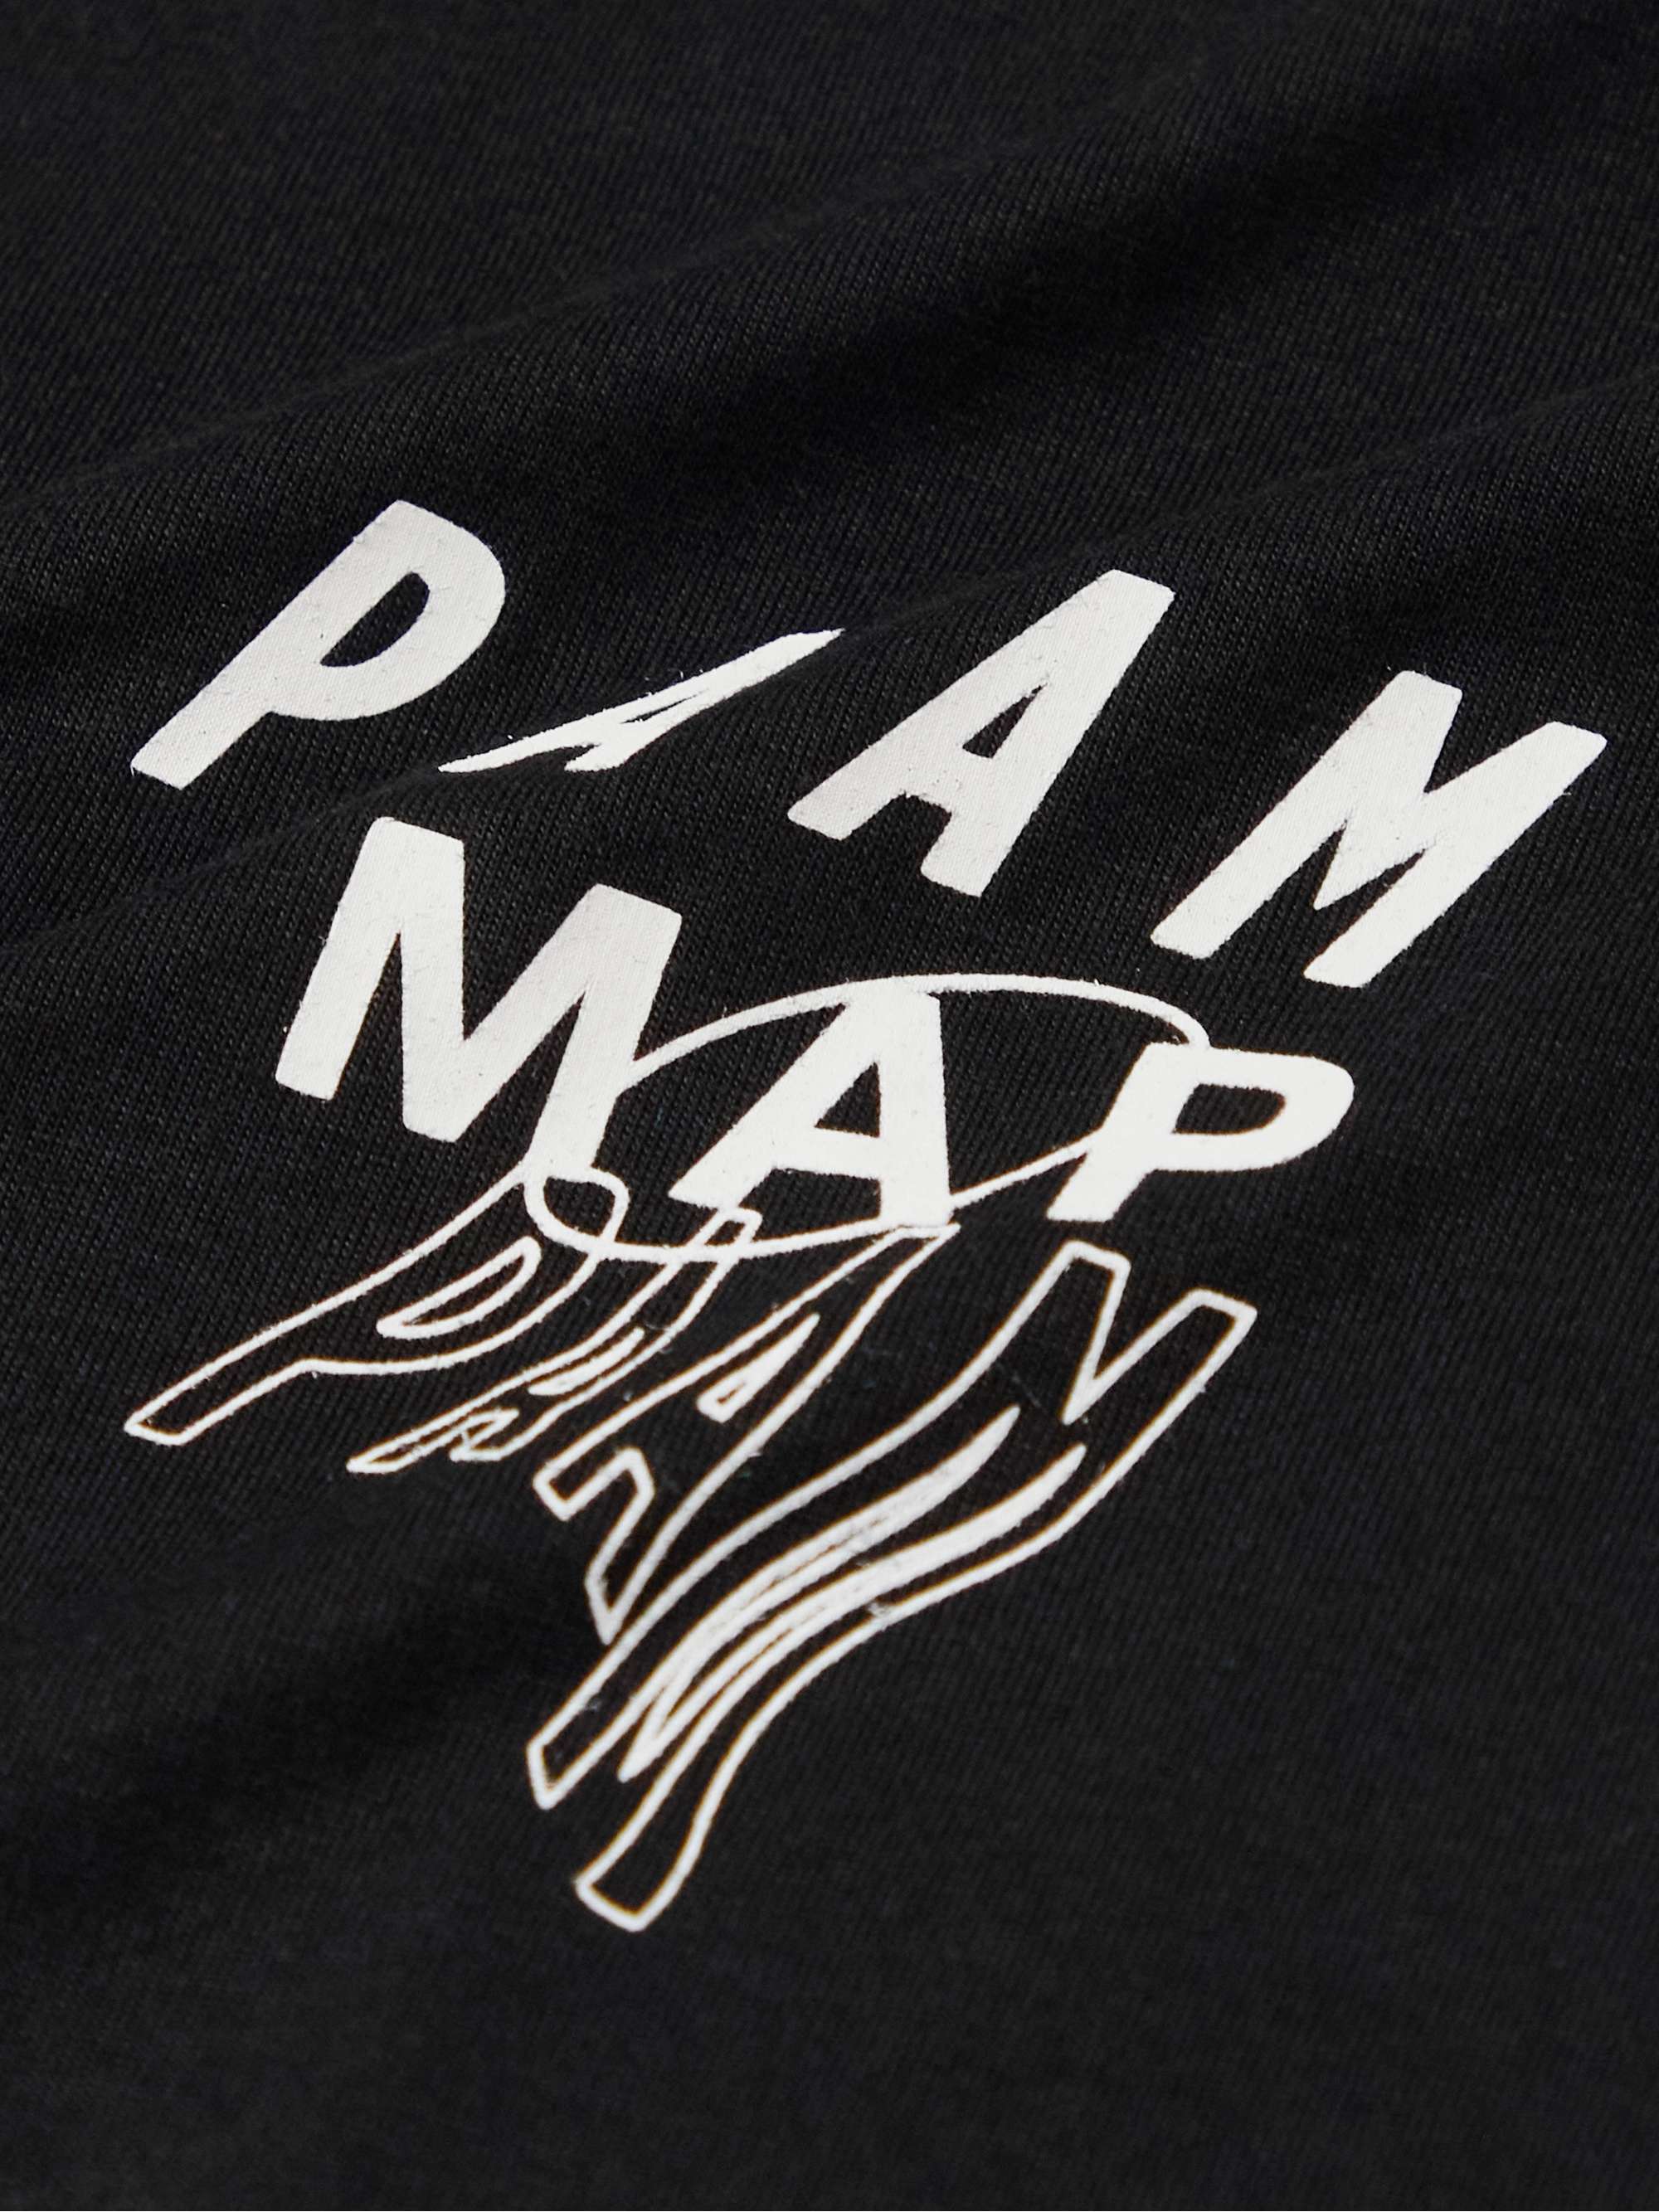 MAAP + P.A.M. Logo-Print Recycled Jersey Cycling T-Shirt